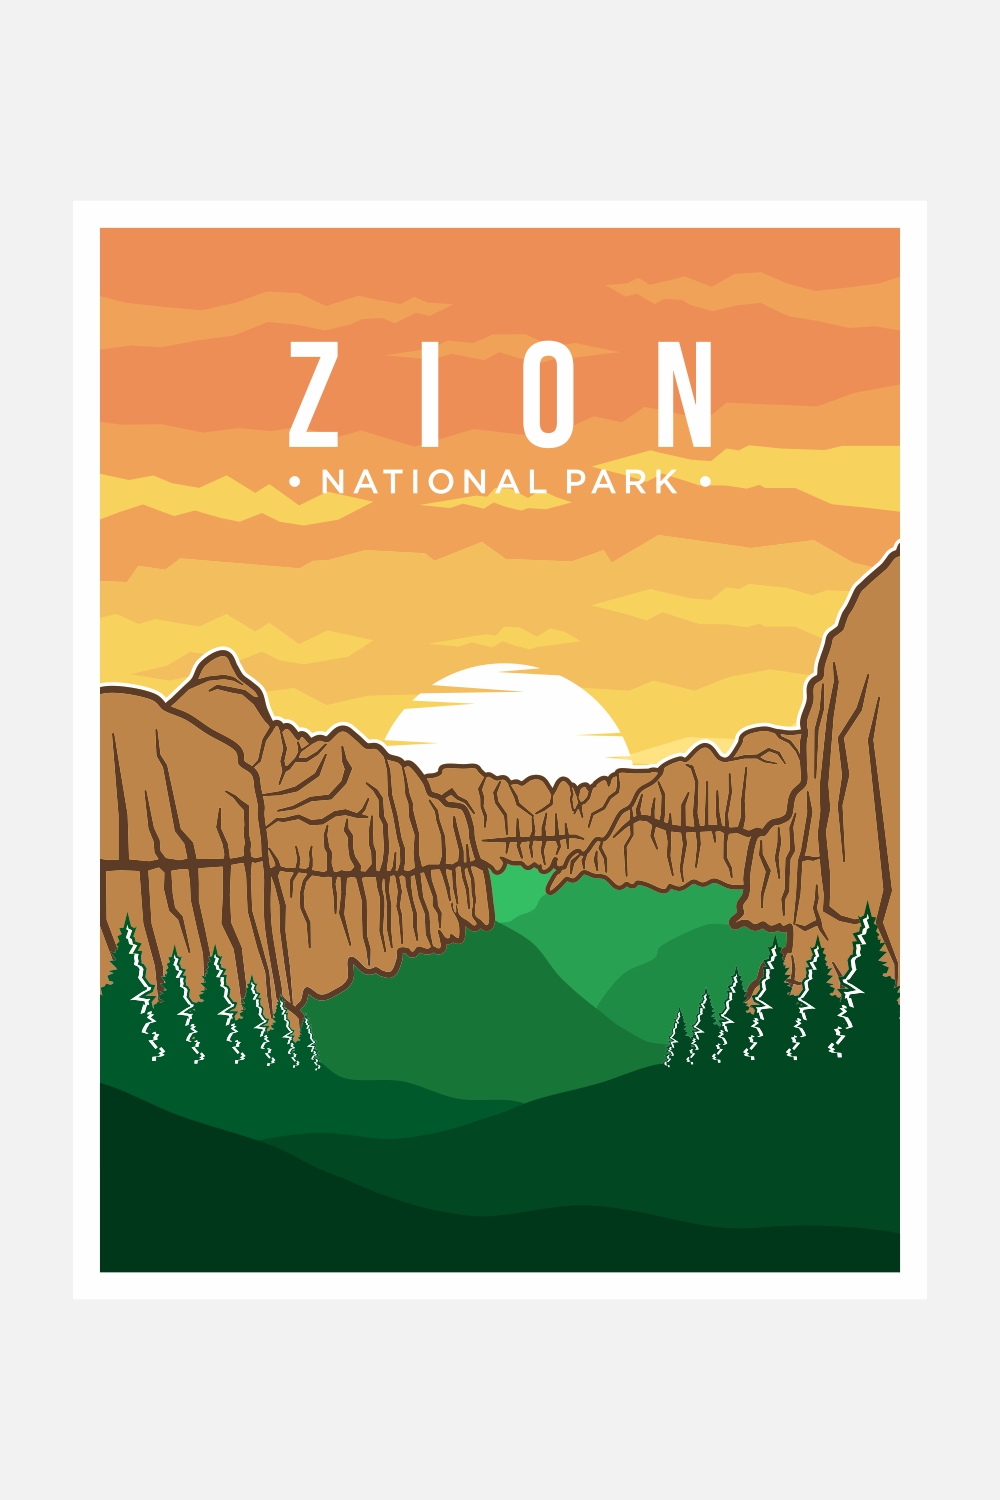 Zion National Park poster vector illustration design – Only $8 pinterest preview image.